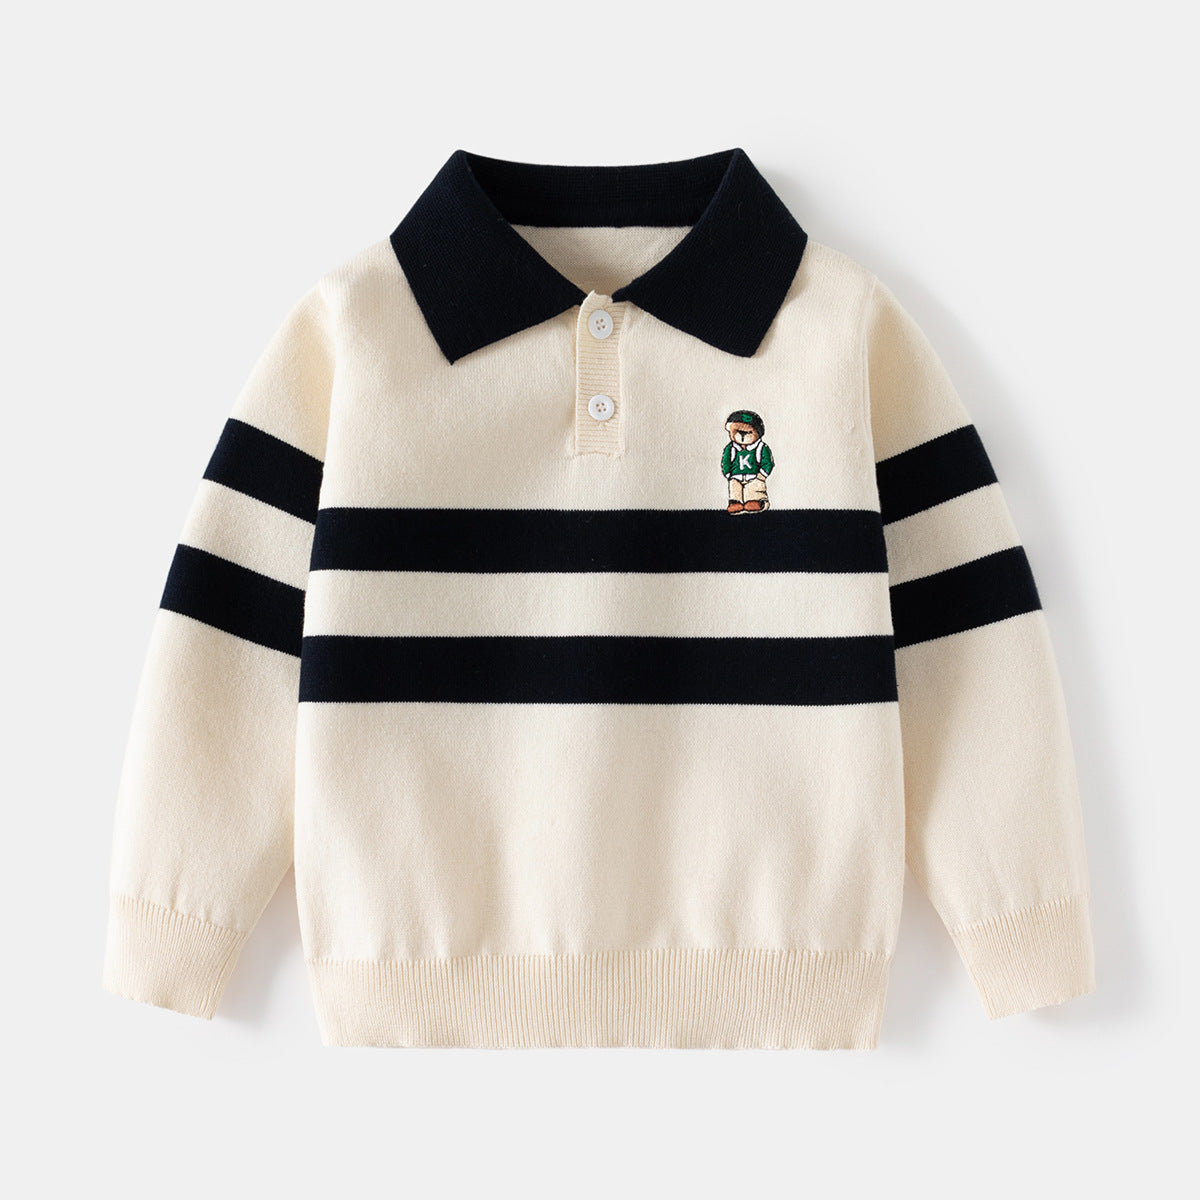 [5131096] - Baju Sweater Polo Lengan Panjang Fashion Import Anak Laki-Laki - Motif Line Guy